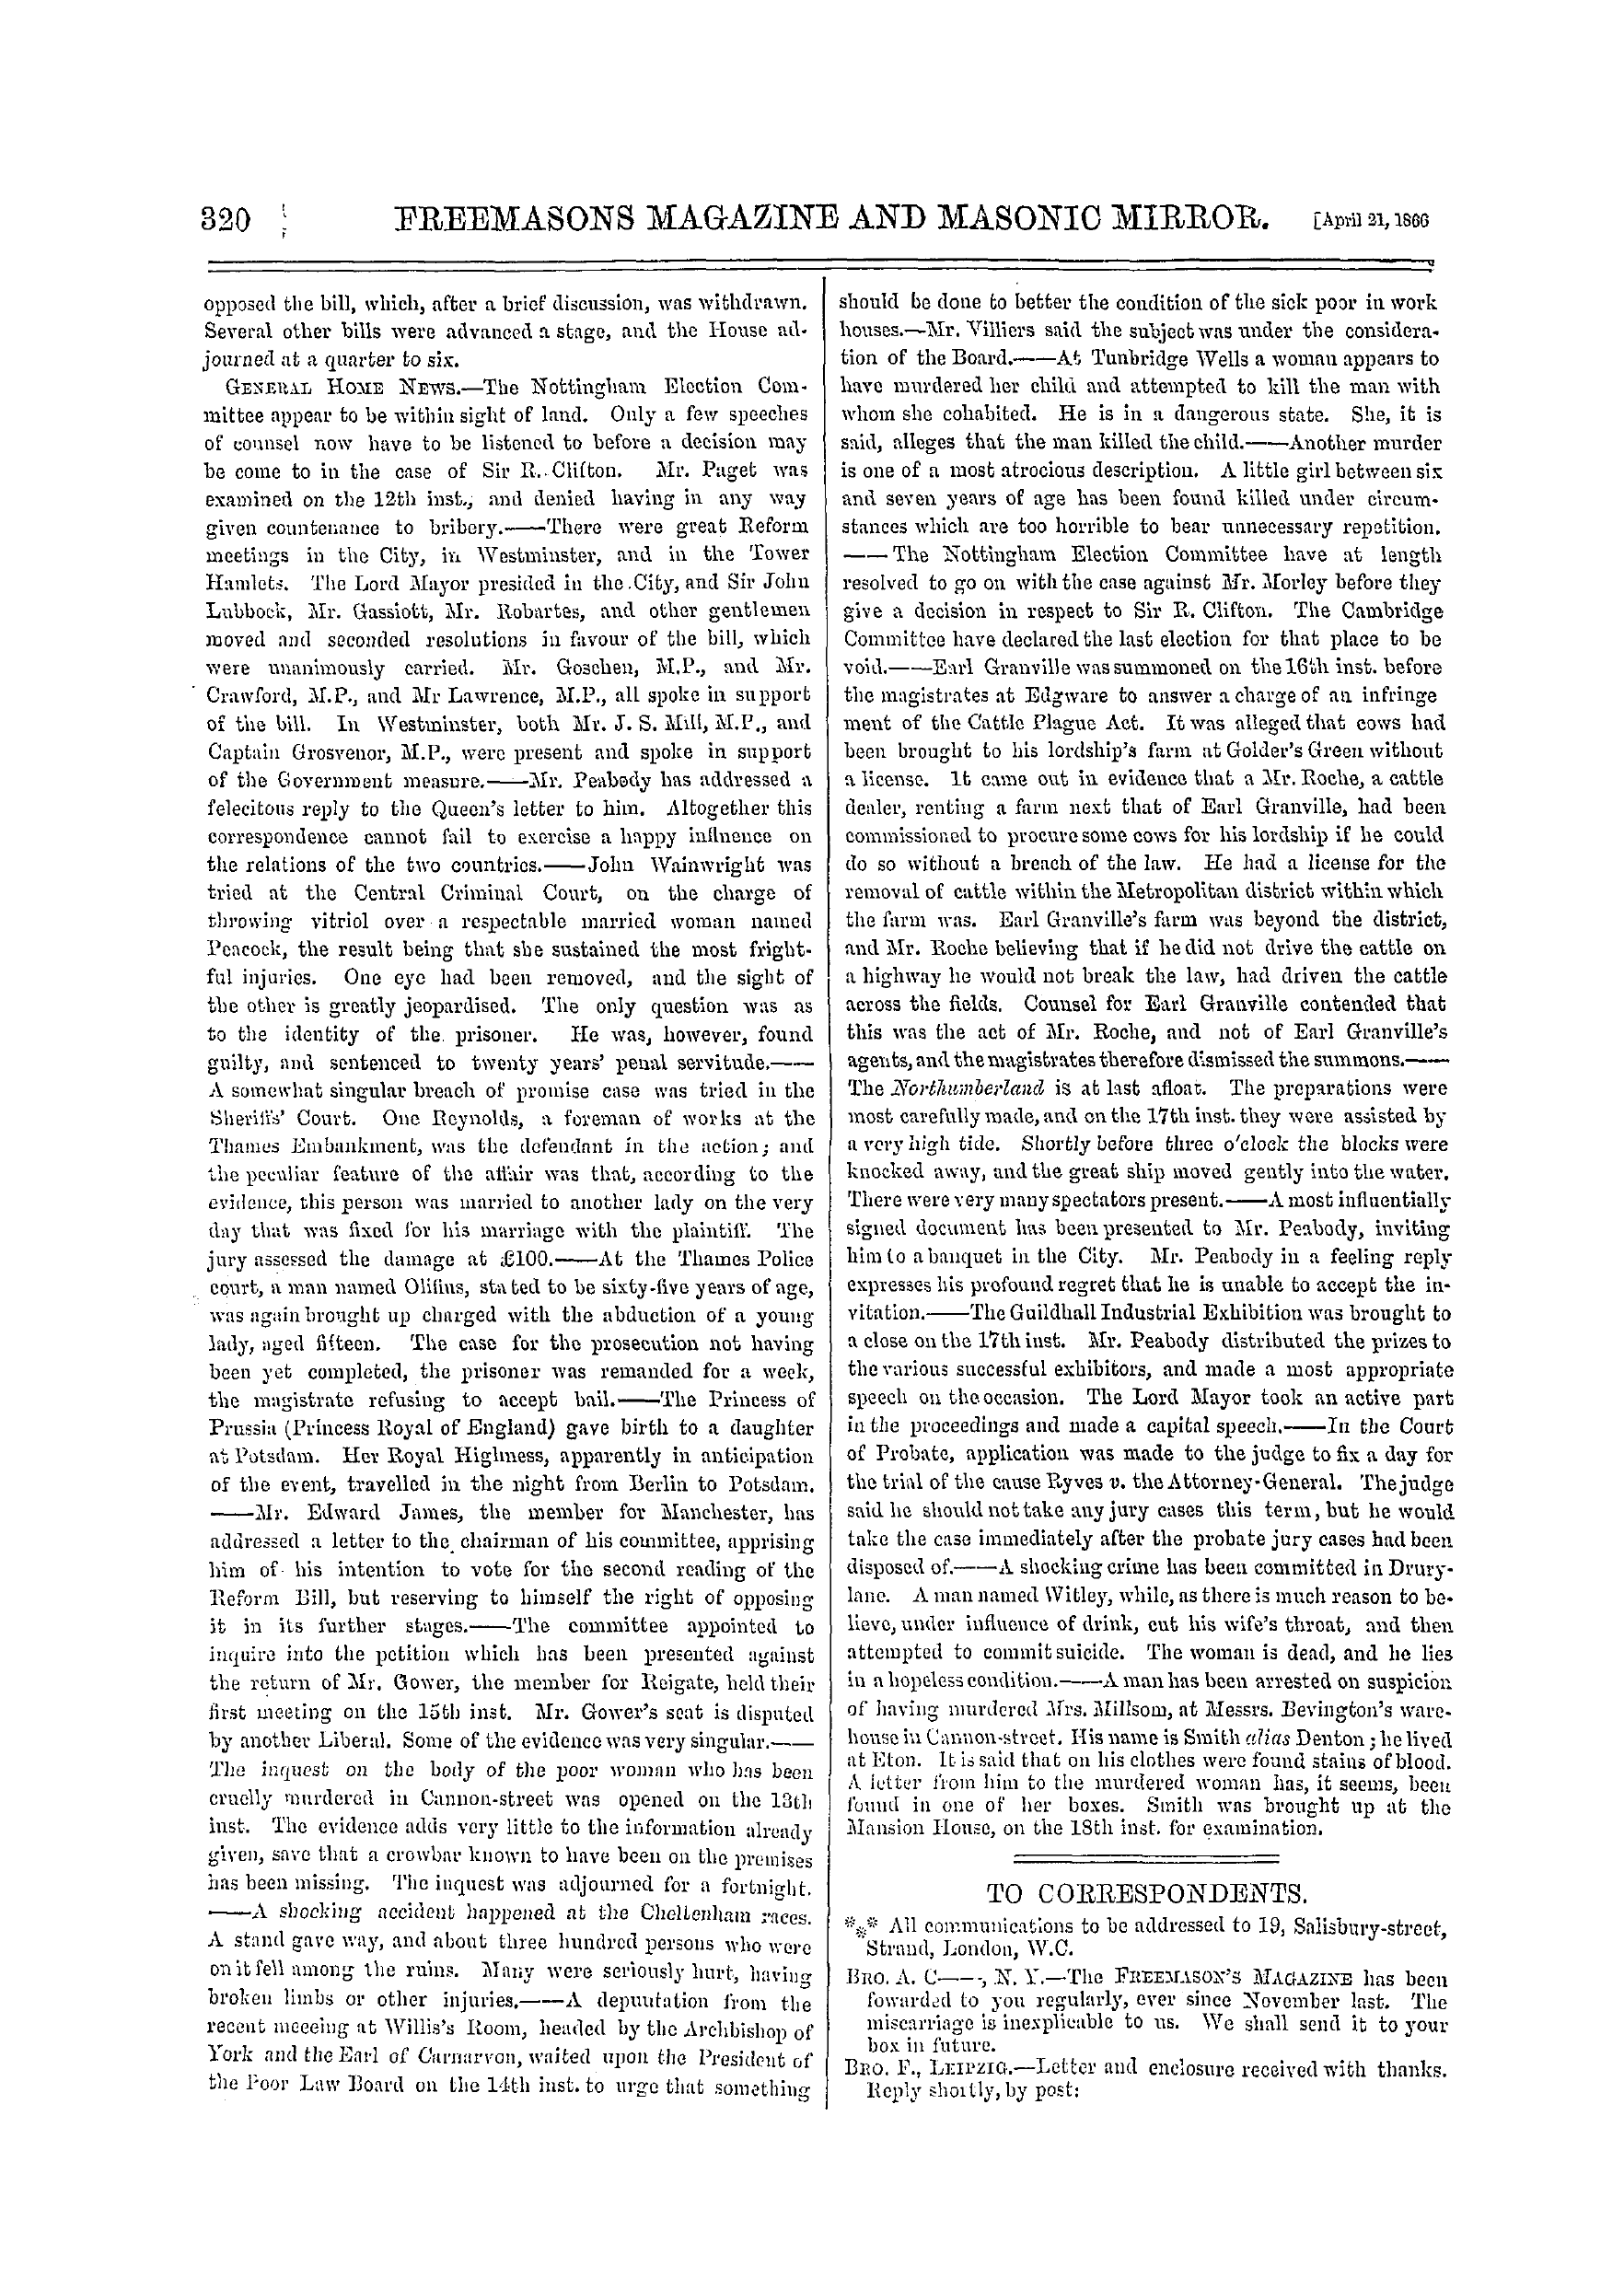 The Freemasons' Monthly Magazine: 1866-04-21 - The Week.